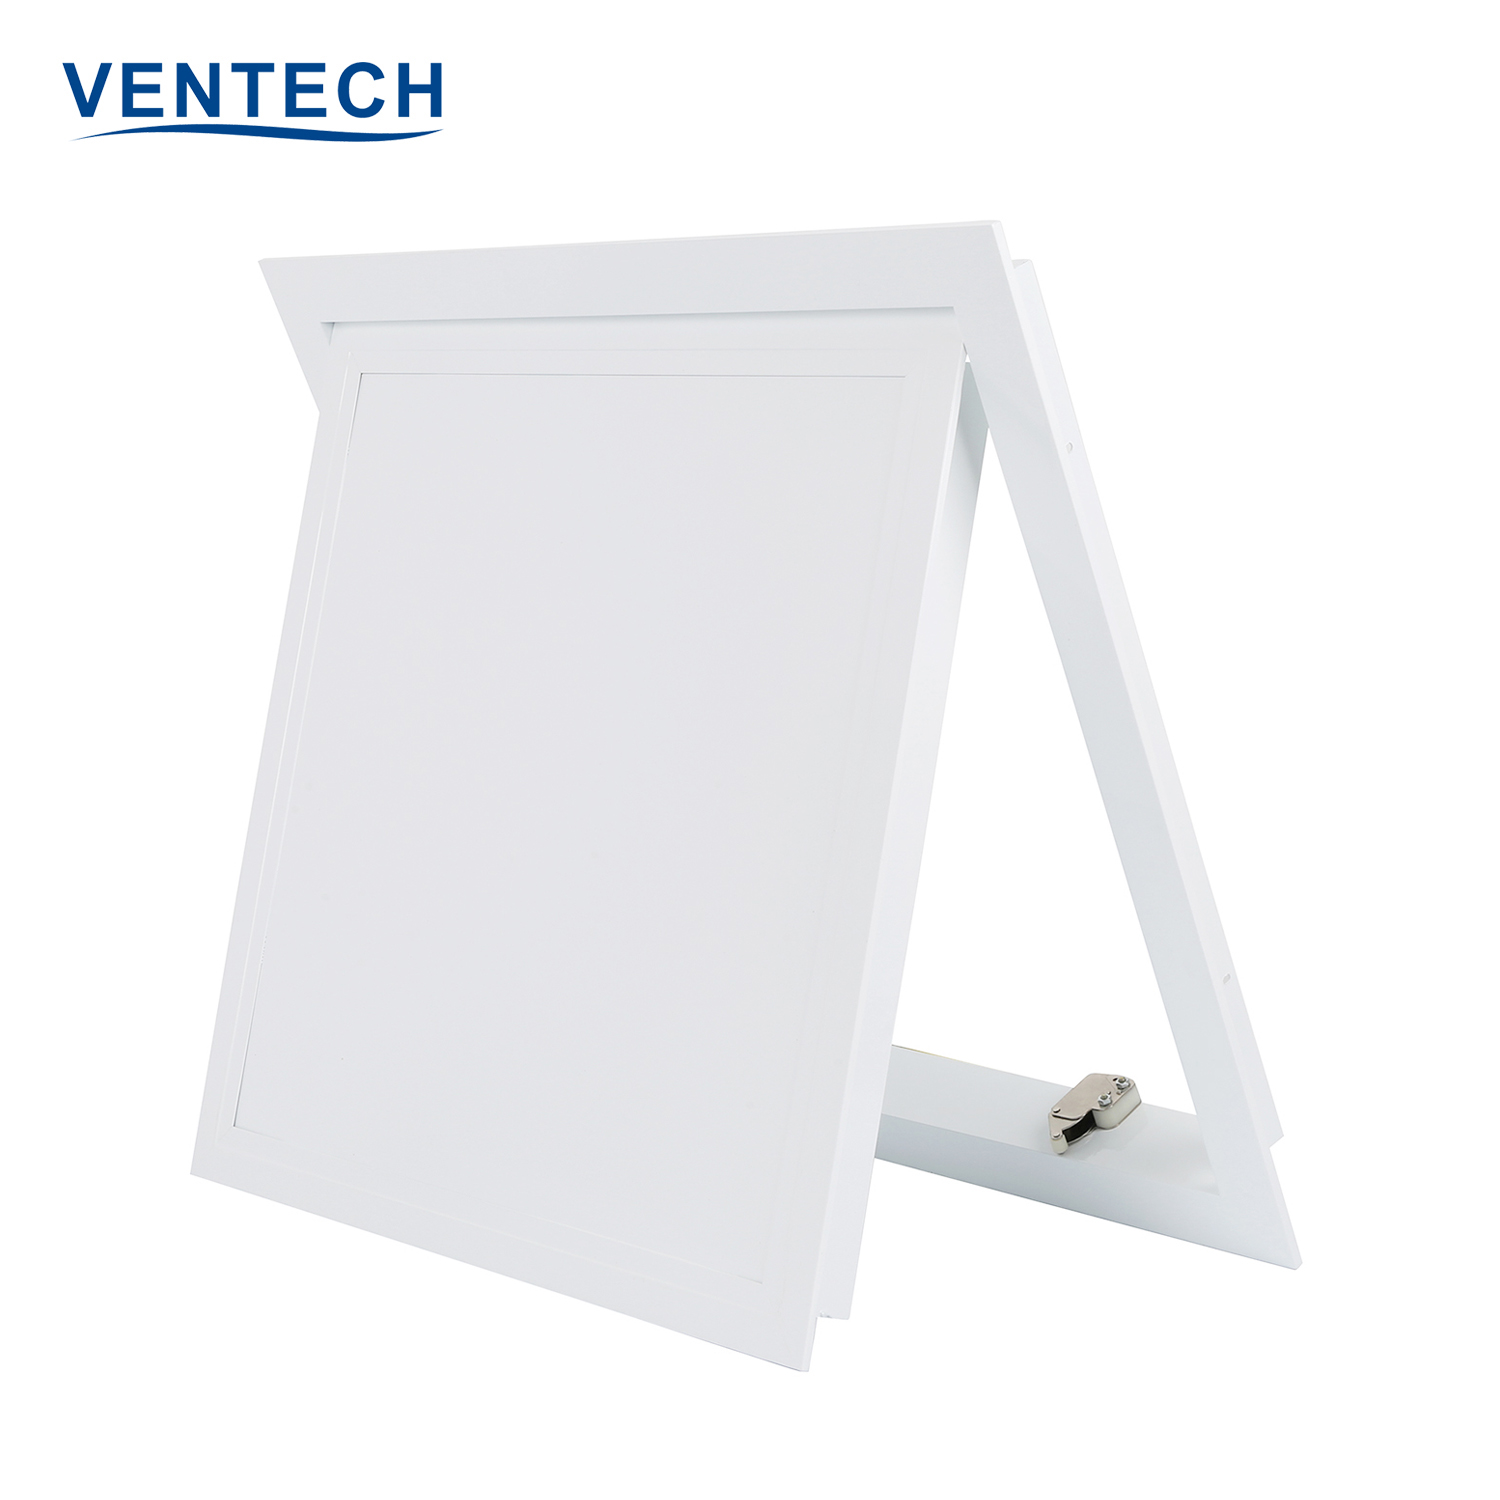 Ventech access door panel wholesale for large public areas-2